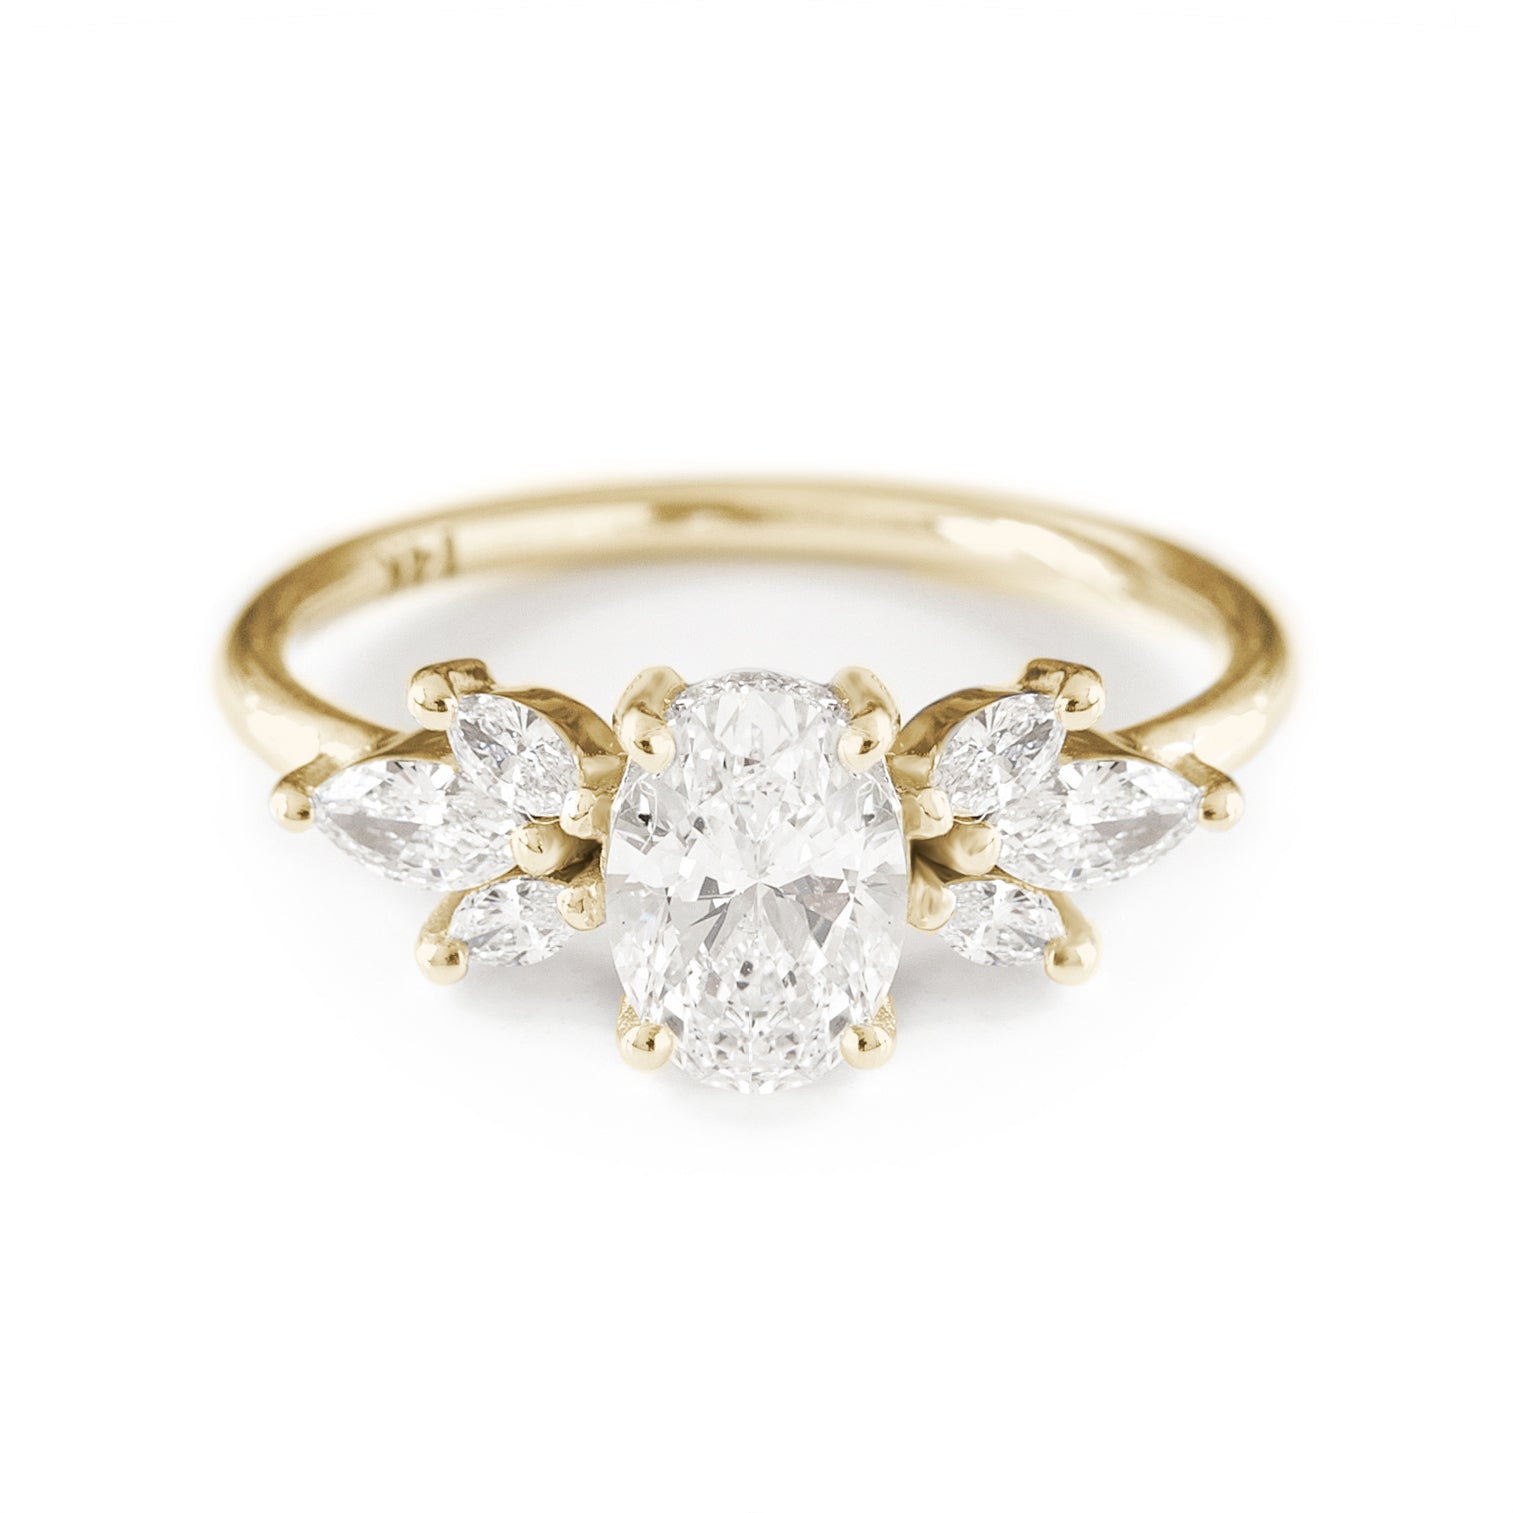 Oval Diamond Engagement ring, Hidden Halo - "Jordan"